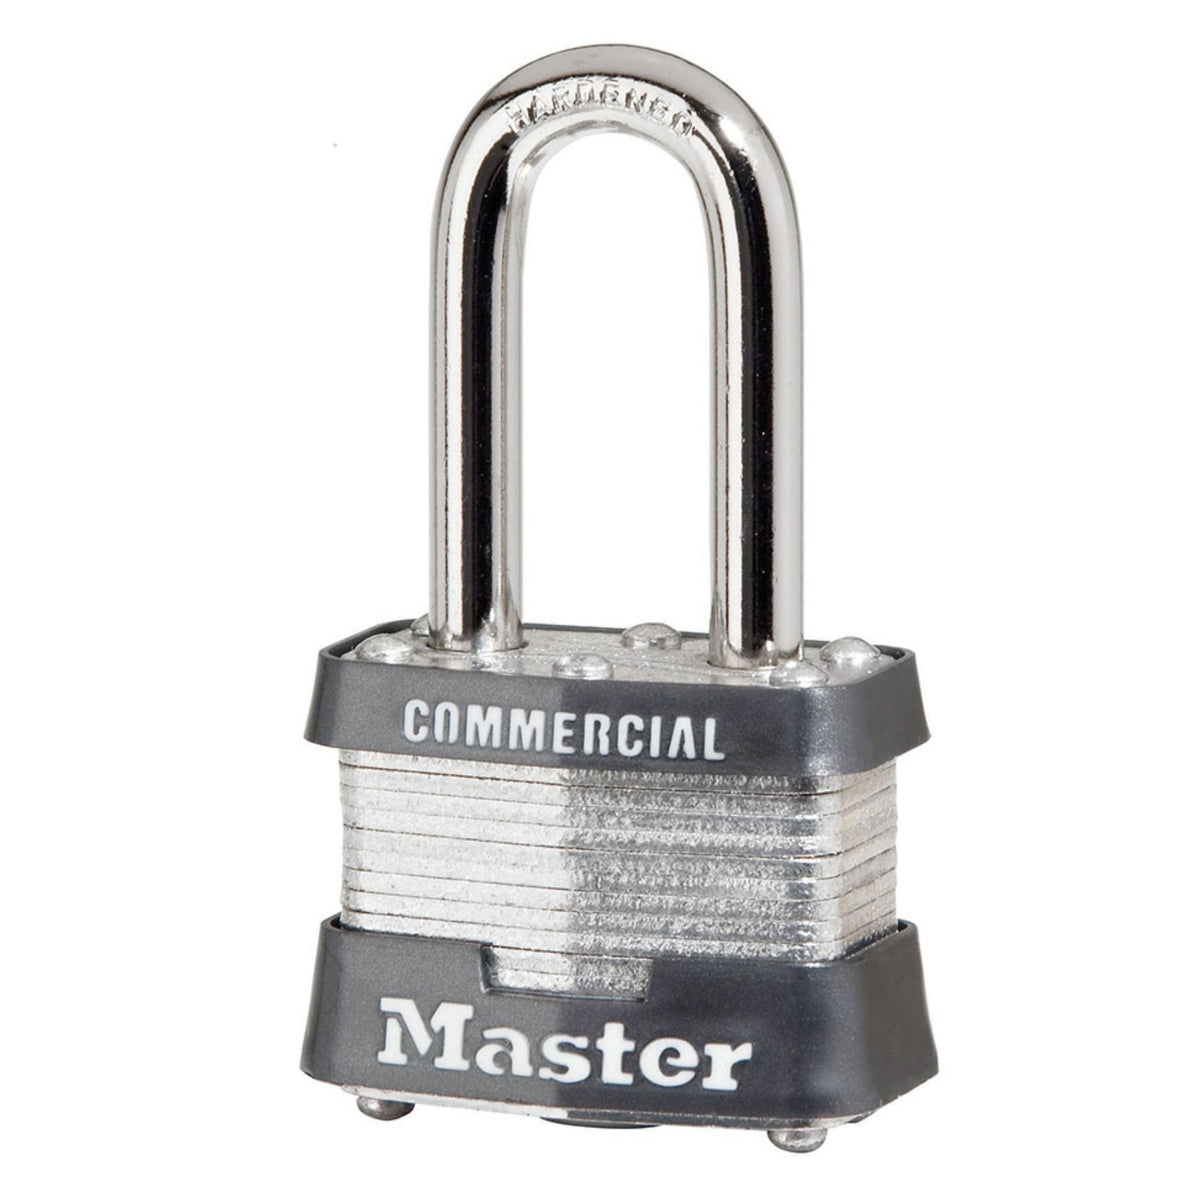 Master Lock 3KALF 2440 Laminated Steel Locks Keyed Alike to Match Key Number KA2440 with 1.5-Inch Shackle - The Lock Source